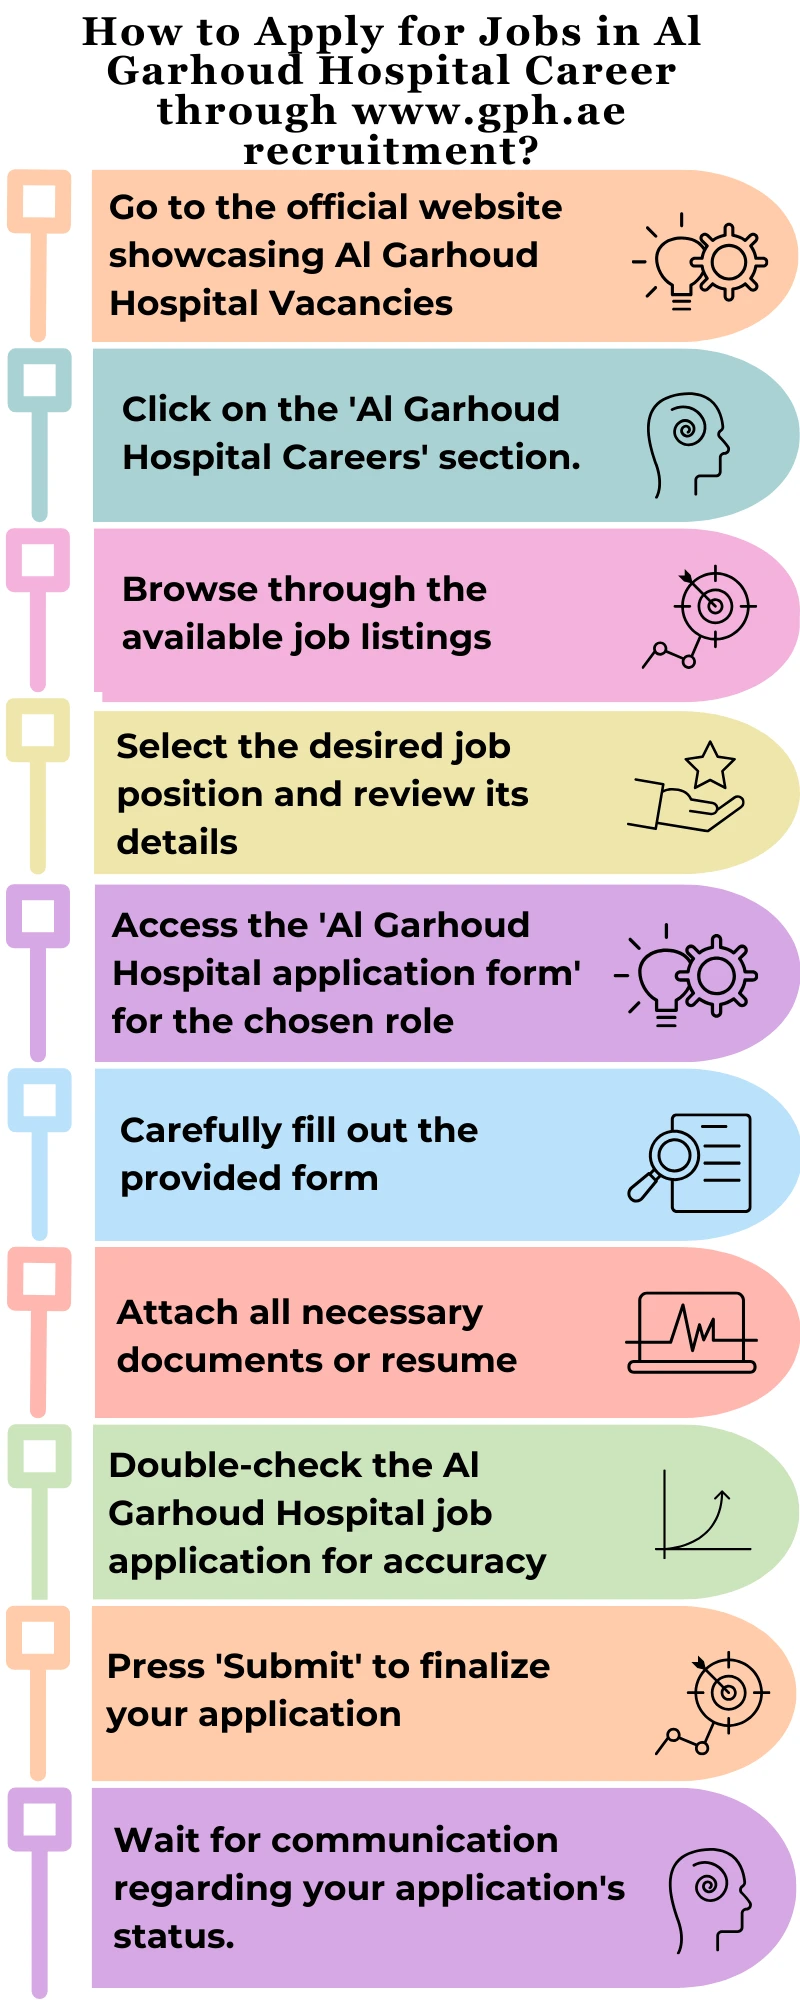 How to Apply for Jobs in Al Garhoud Hospital Career through www.gph.ae recruitment?